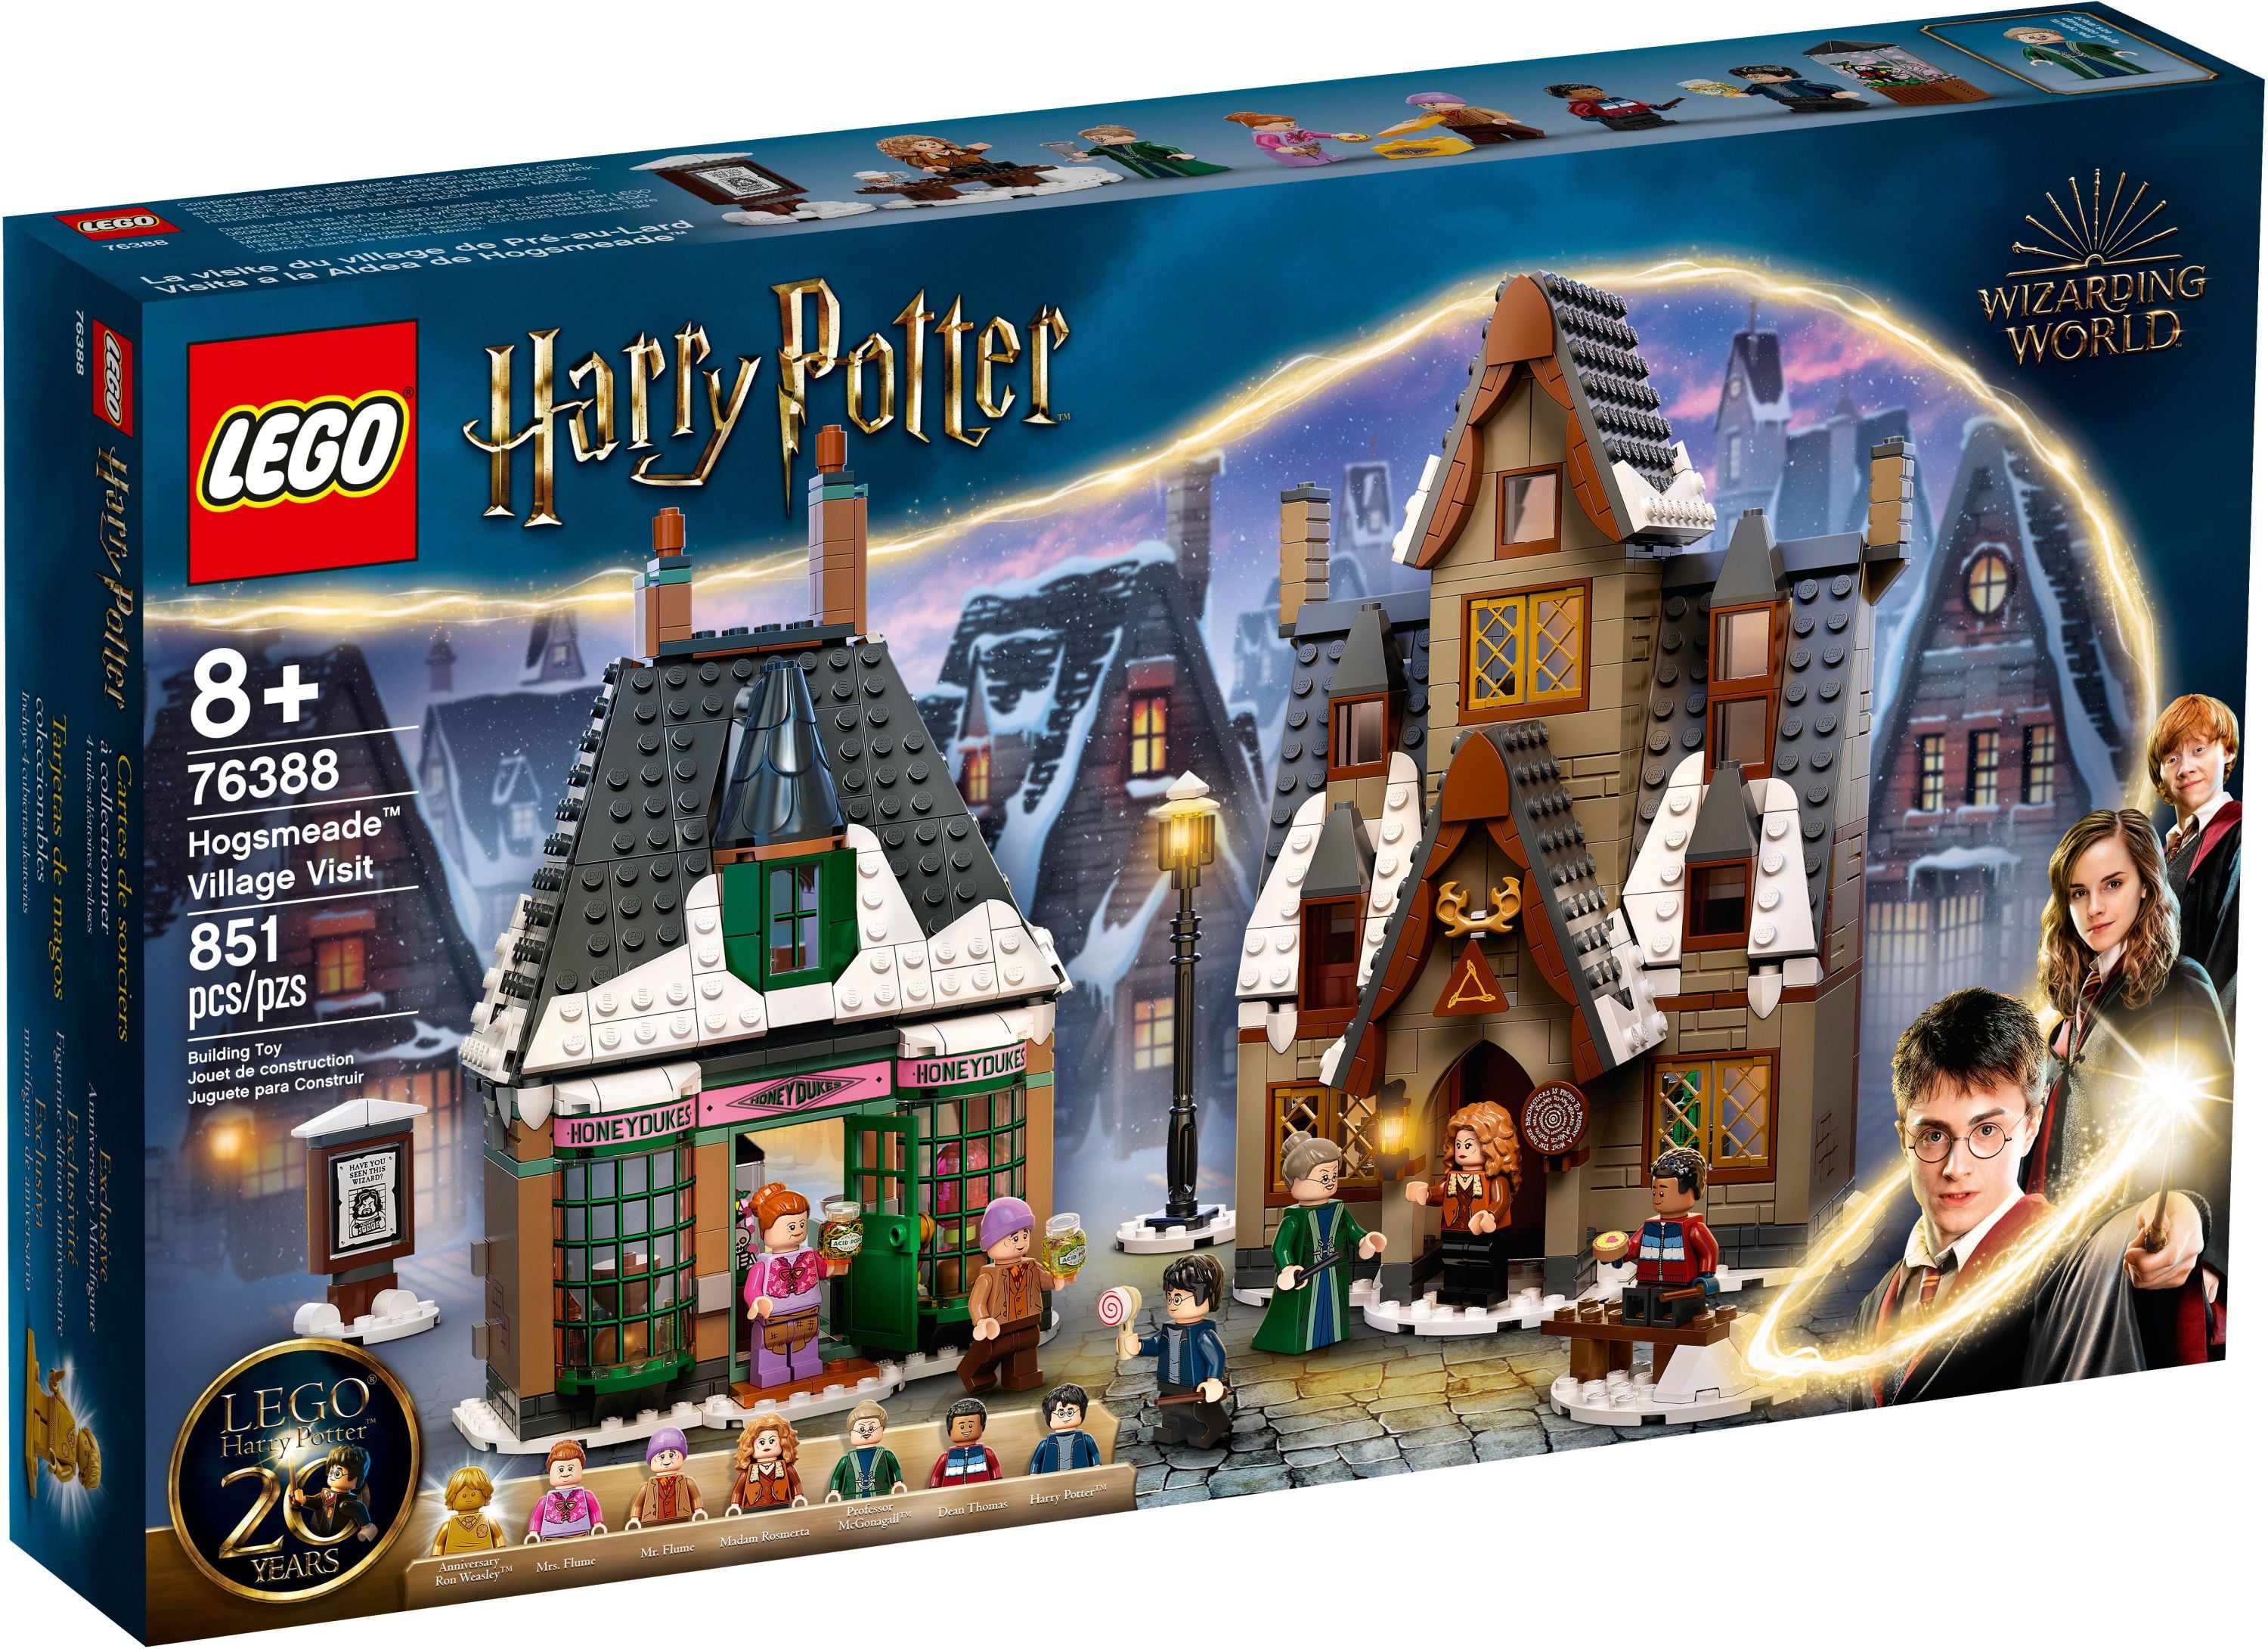 New LEGO Harry Potter sets unveiled – giant minifigures, Hogsmeade